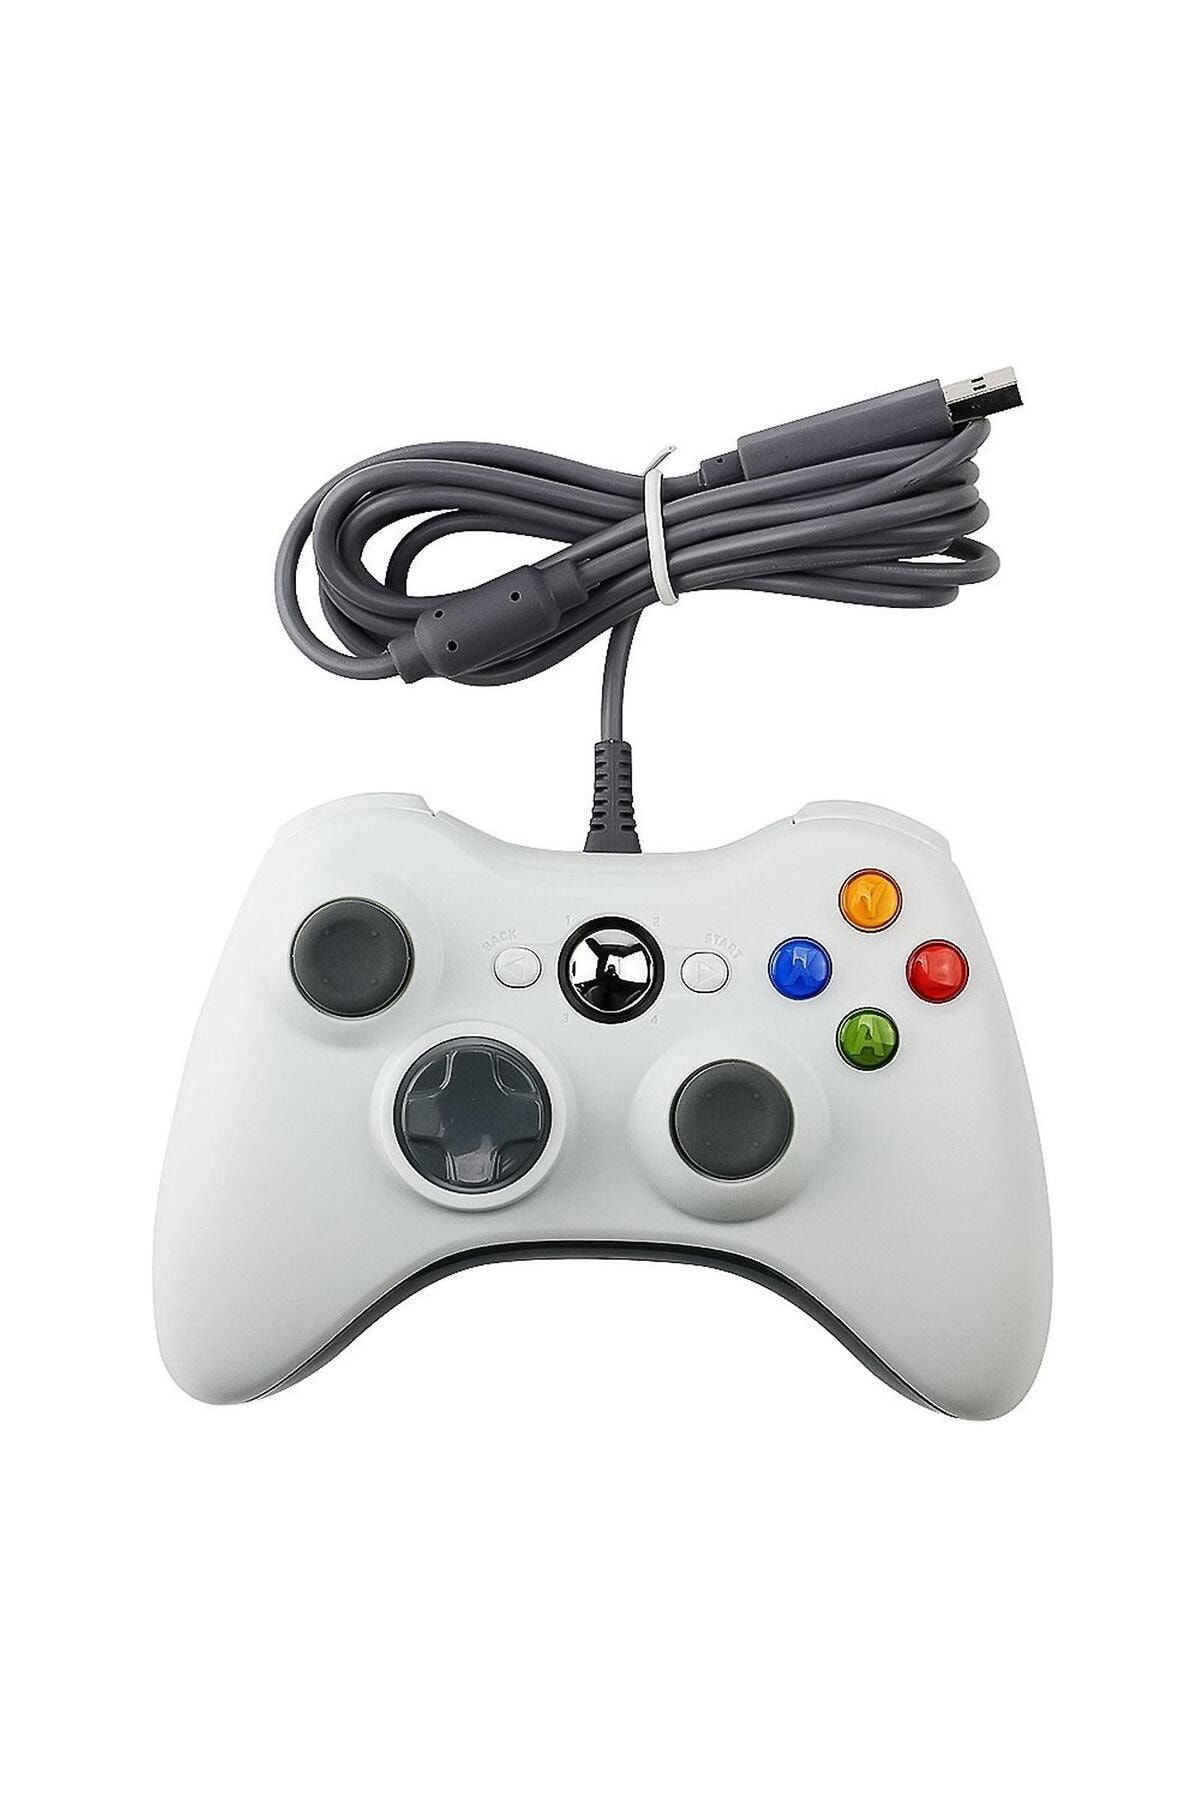 İTHALCİM Xbox 360 Kablolu Oyun Kolu (PC VE XBOX 360 UYUMLU) - Beyaz